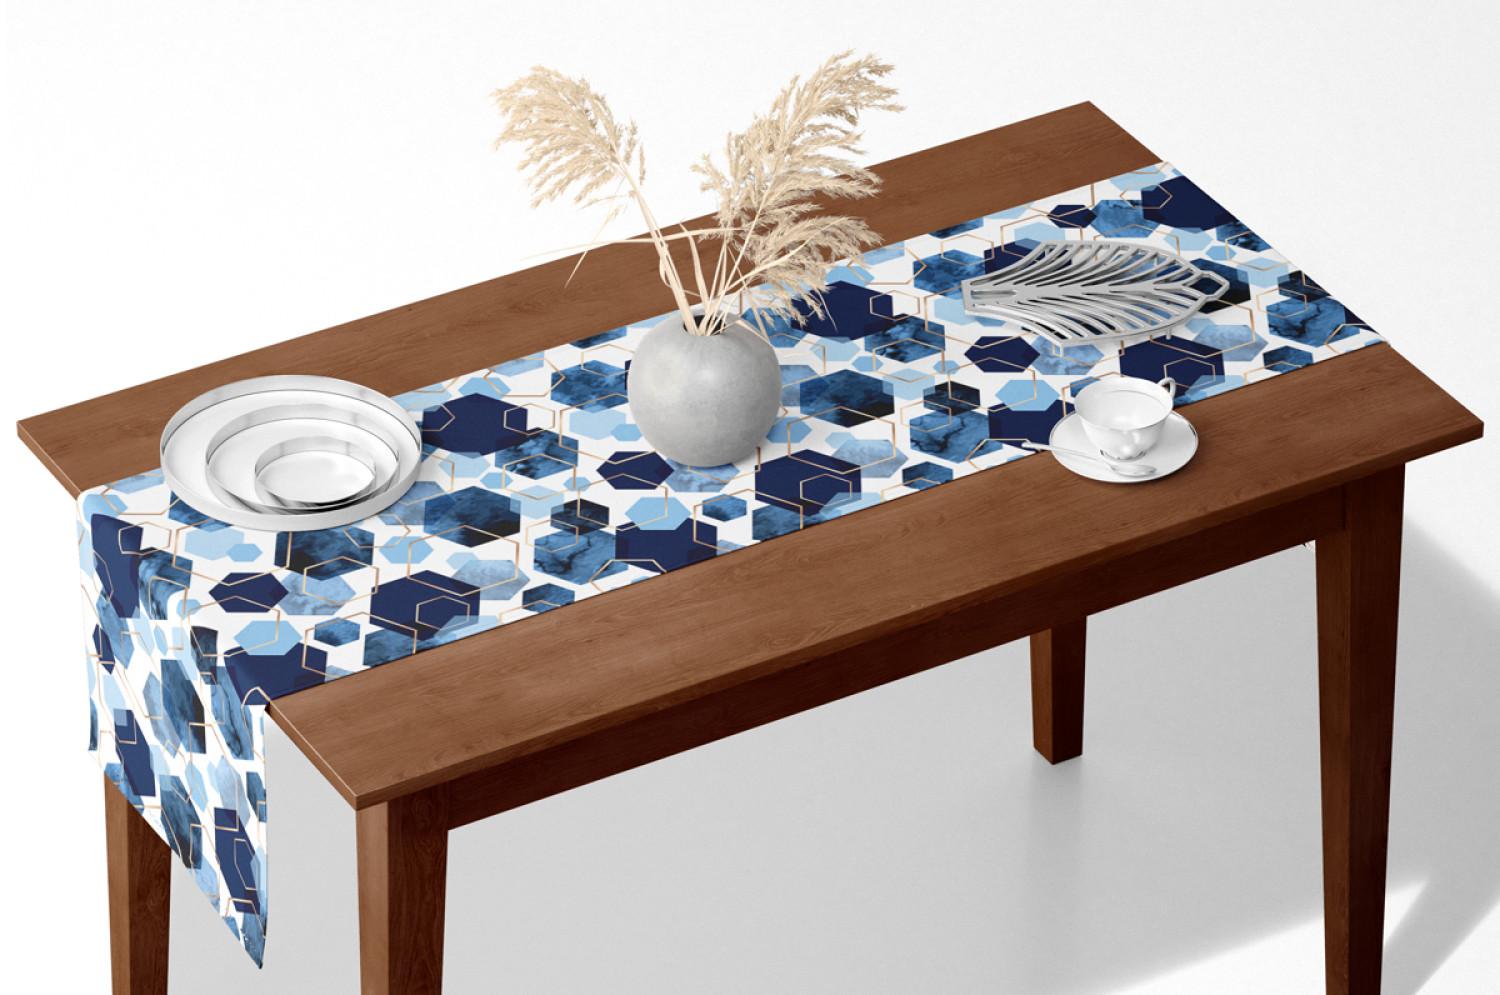 Table Runner Elegant hexagons - geometric motifs shown on a white background